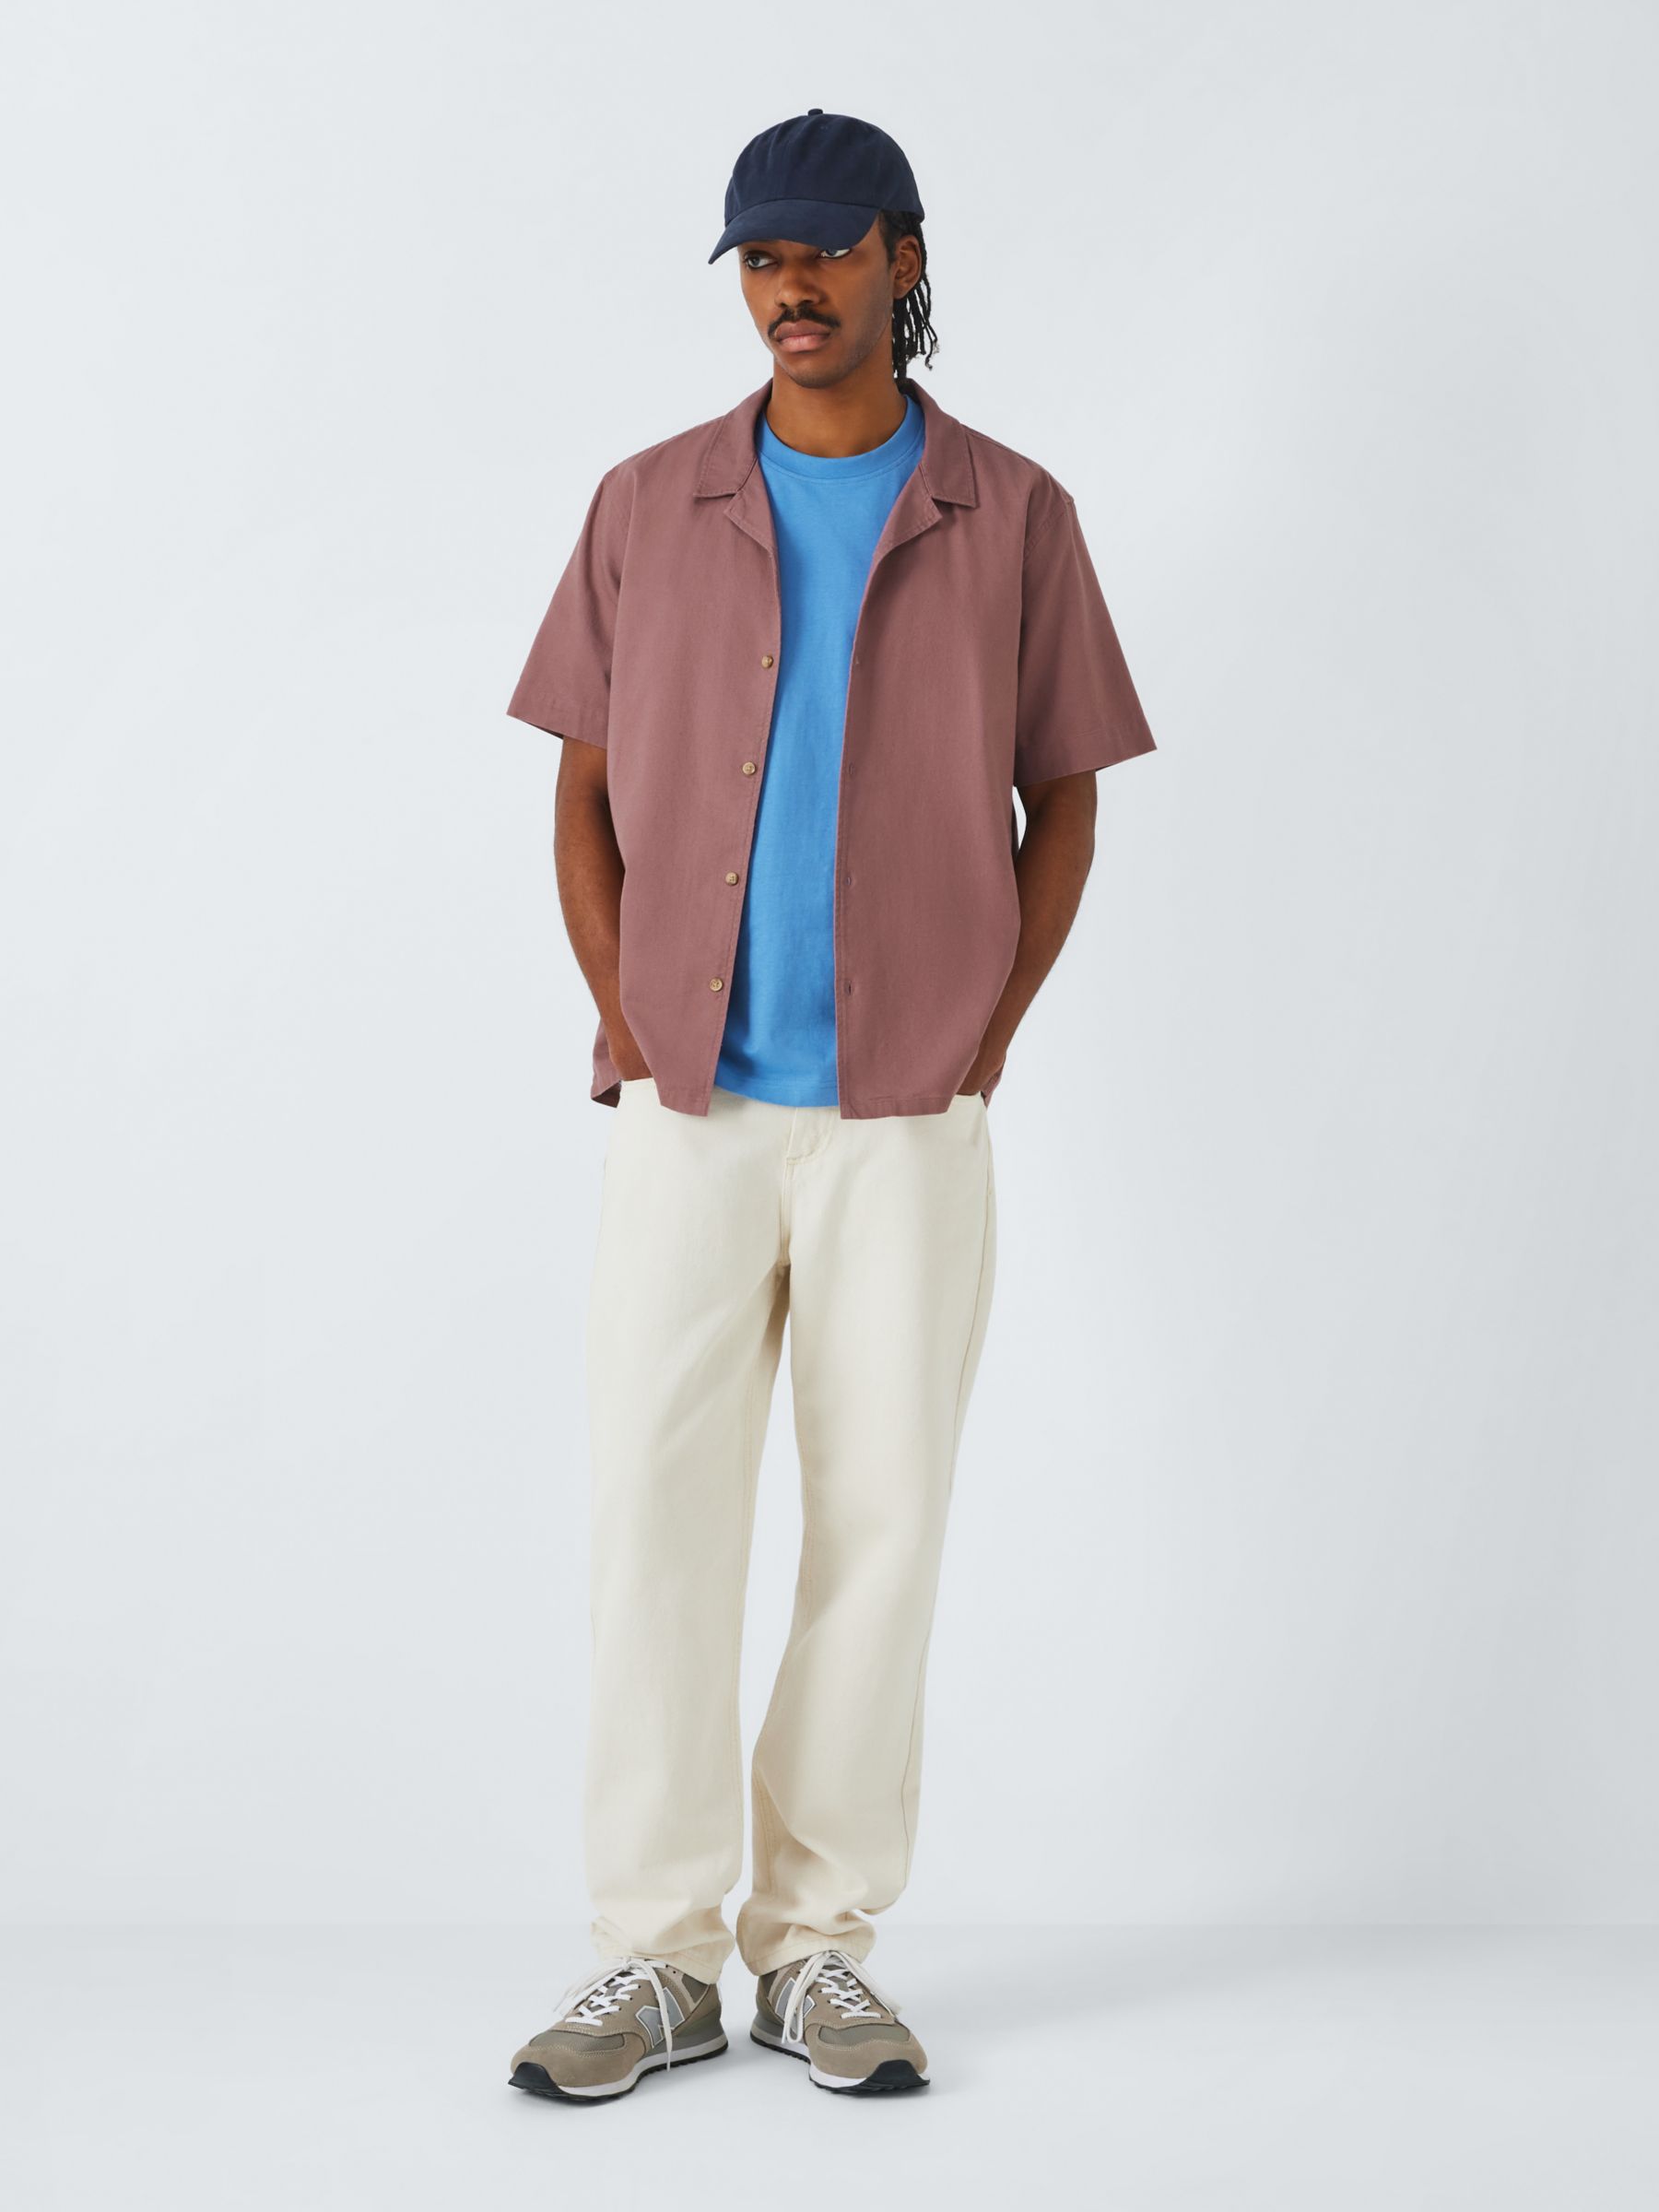 John Lewis ANYDAY Cotton & Linen Cuban Collar Shirt, Rose Brown, S